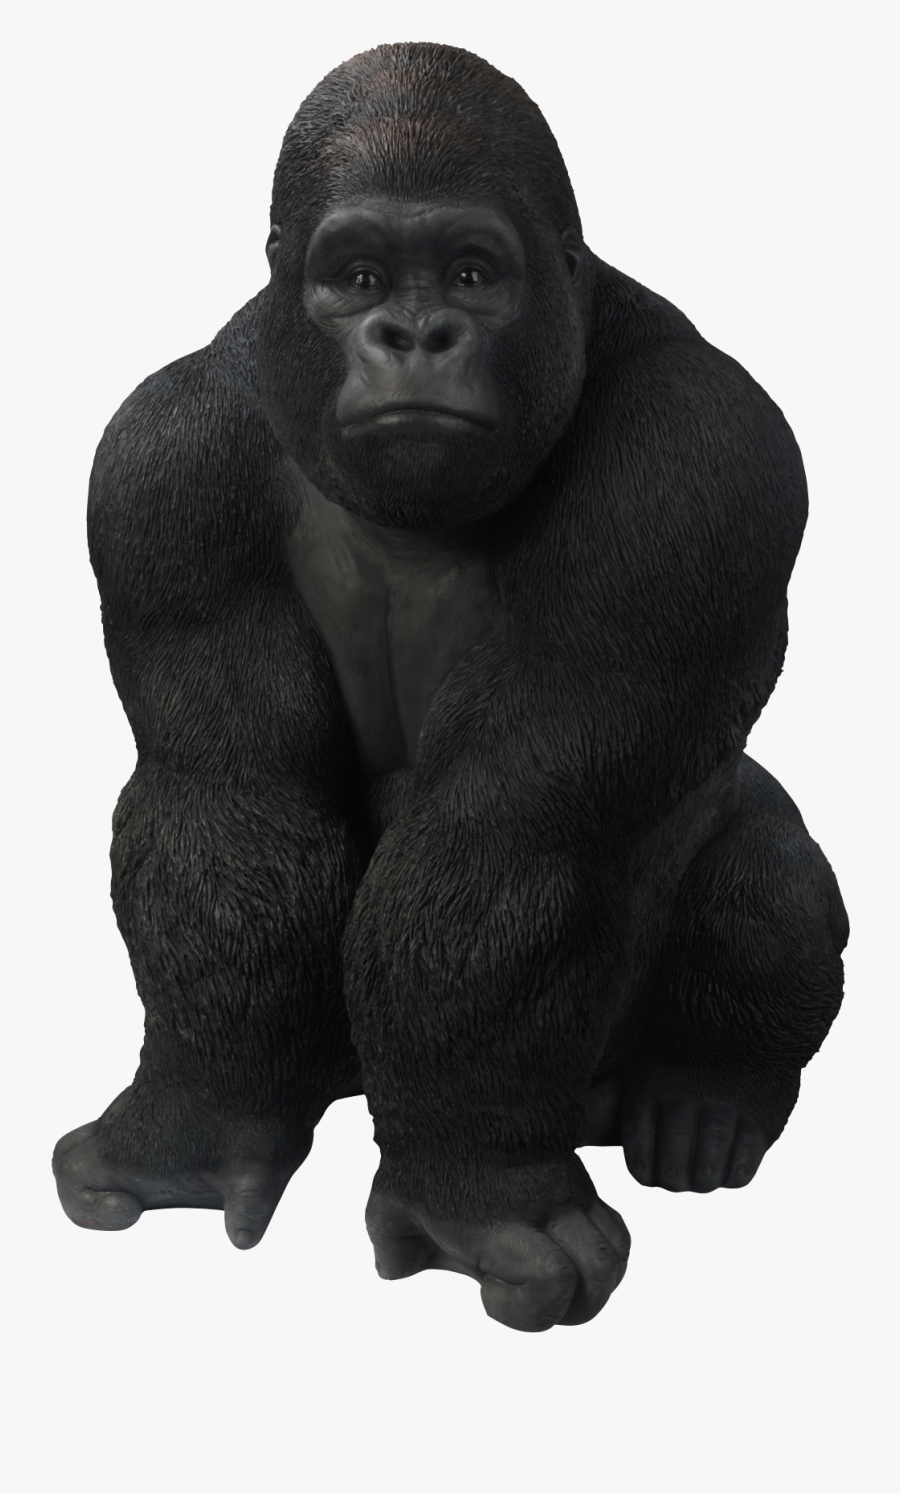 Png Images Free Download - Transparent Background Gorilla Png, Transparent Clipart